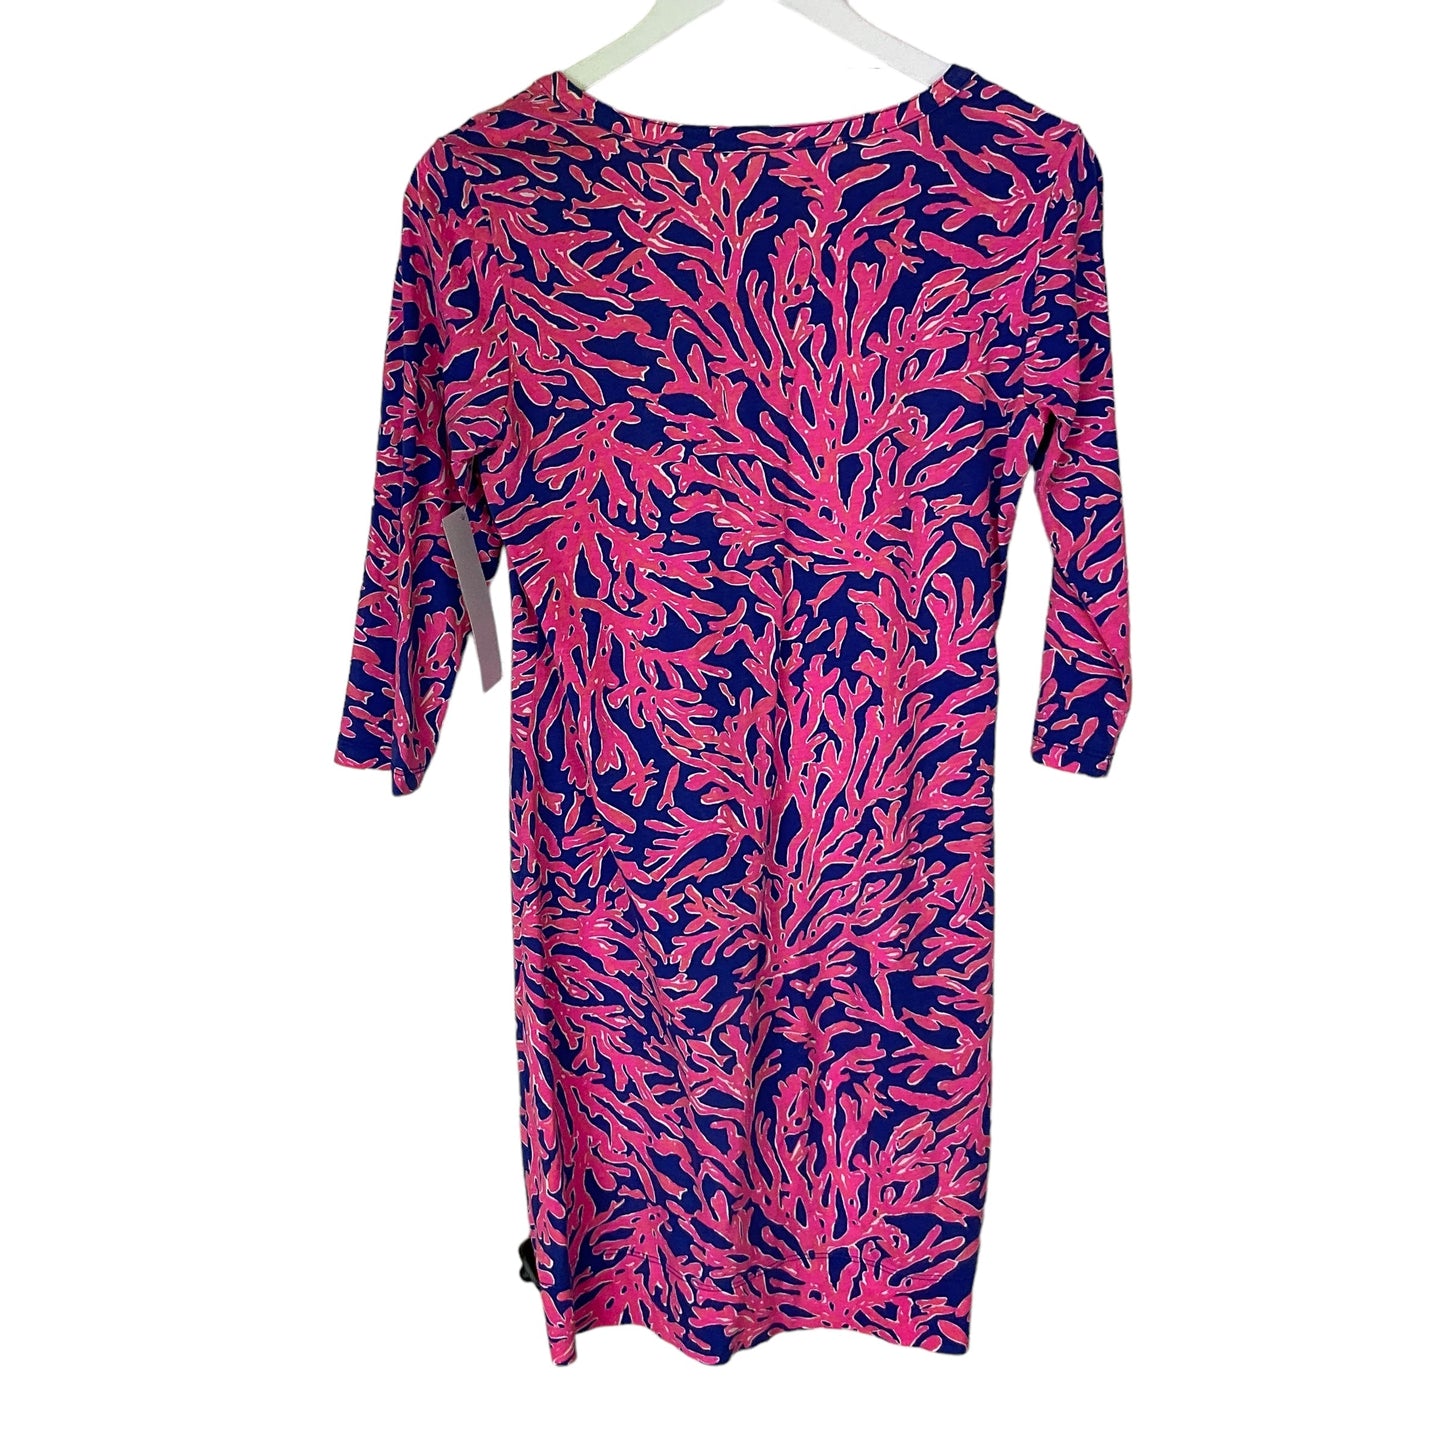 Blue & Pink Dress Designer Lilly Pulitzer, Size S